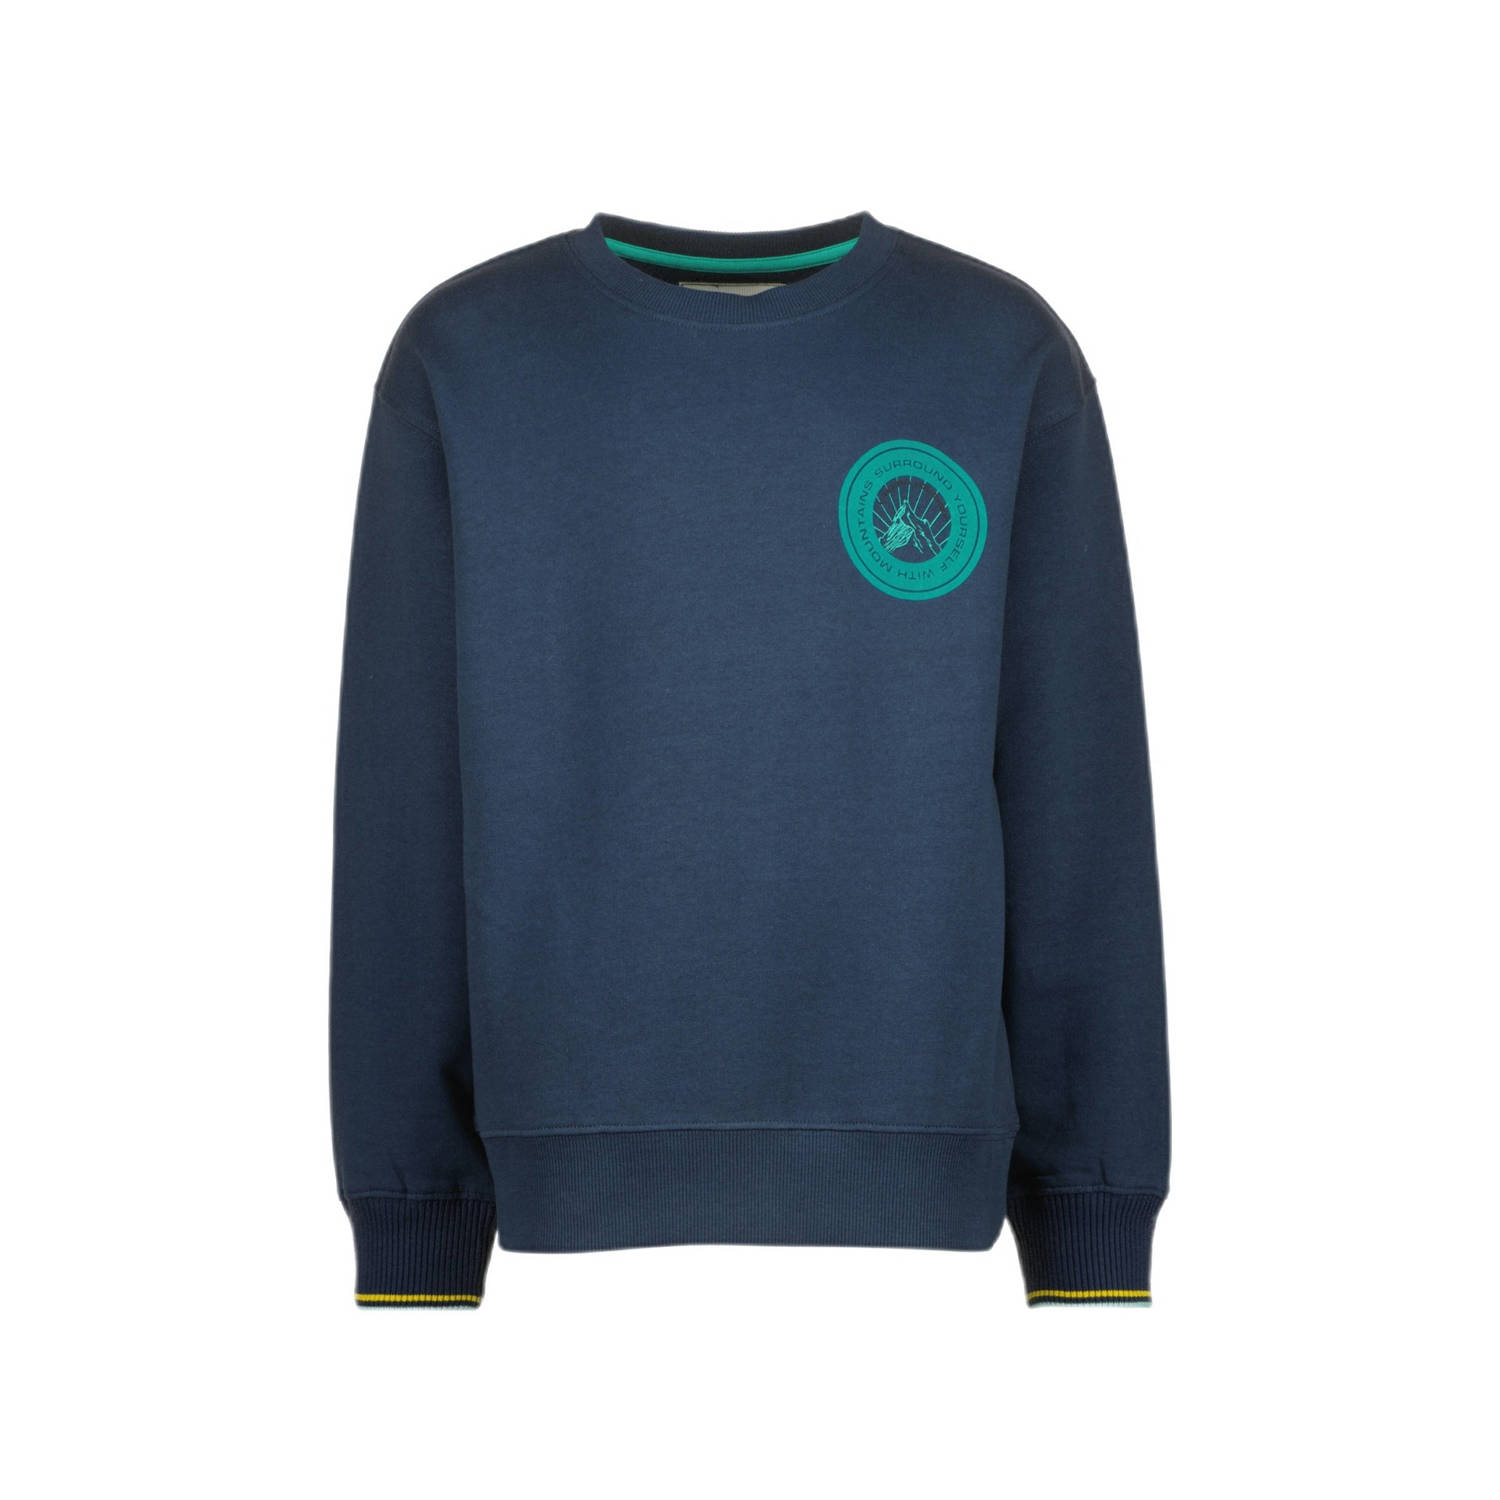 Vingino sweater Nave met logo donkerblauw groen